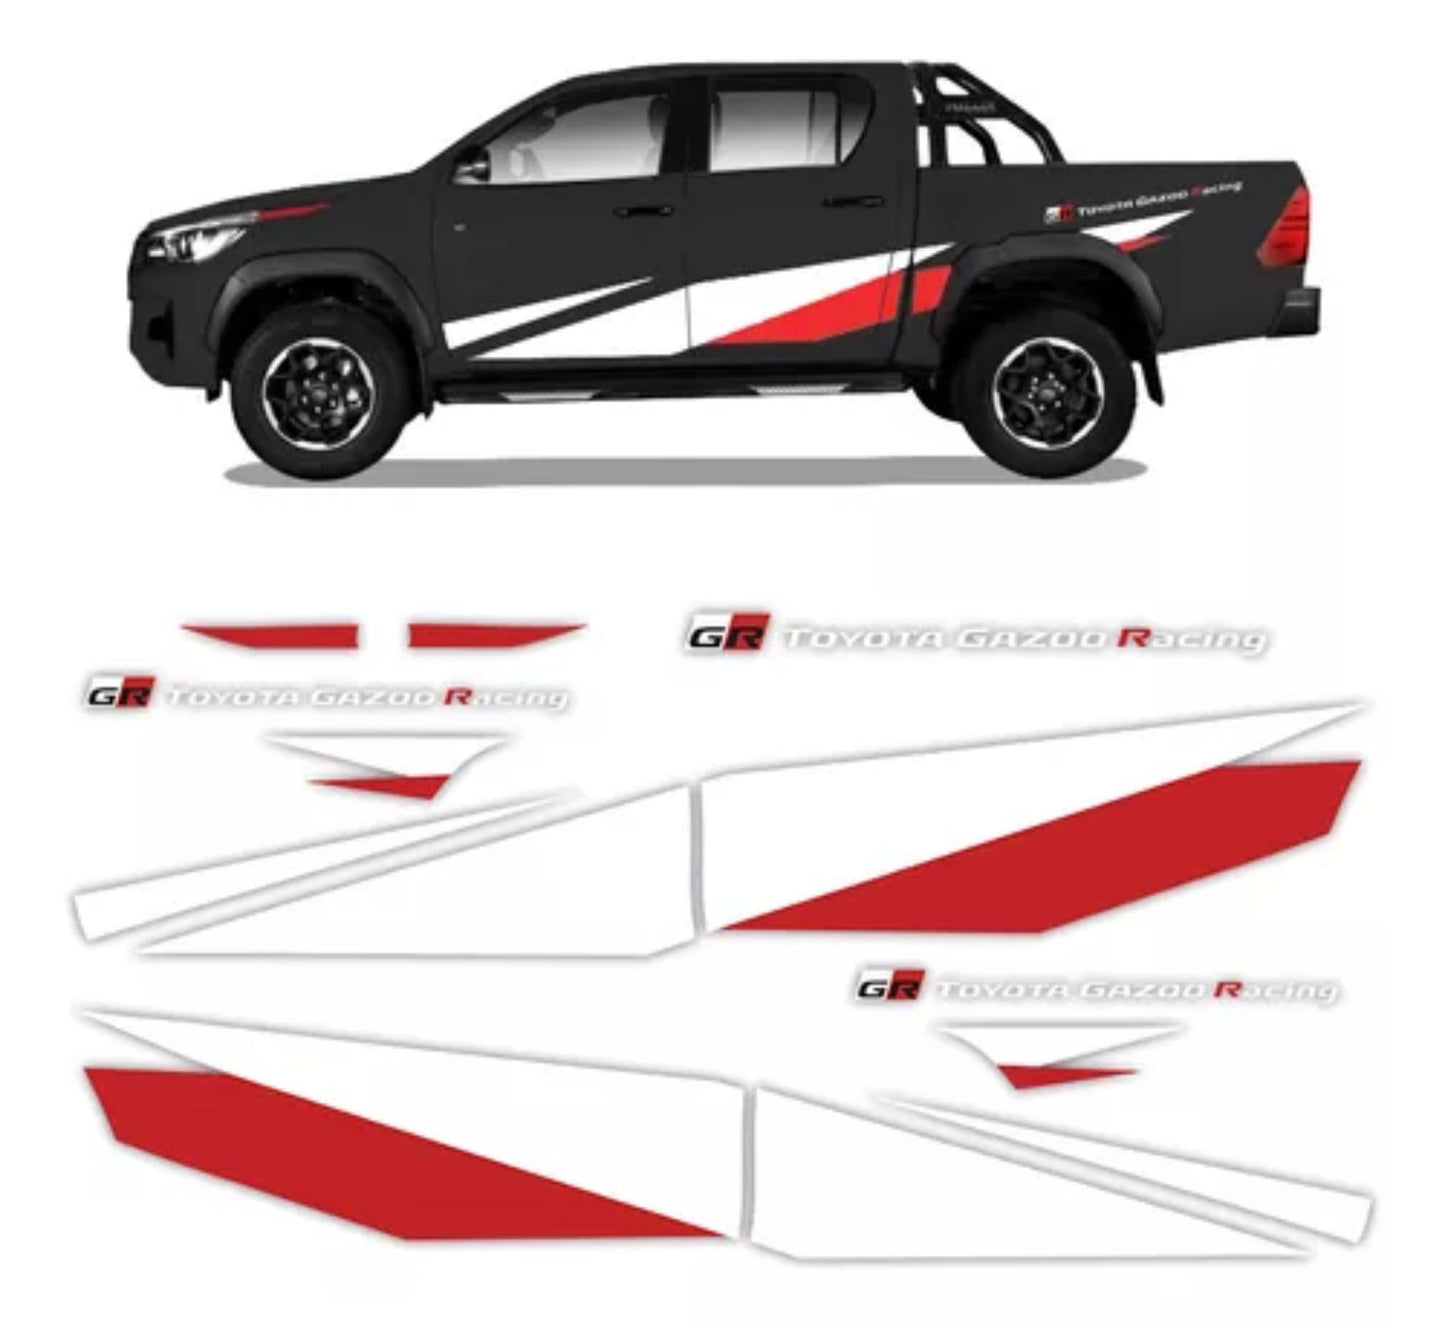 Calcomanías GR Toyota Hilux Gazoo Racing Kit Completo